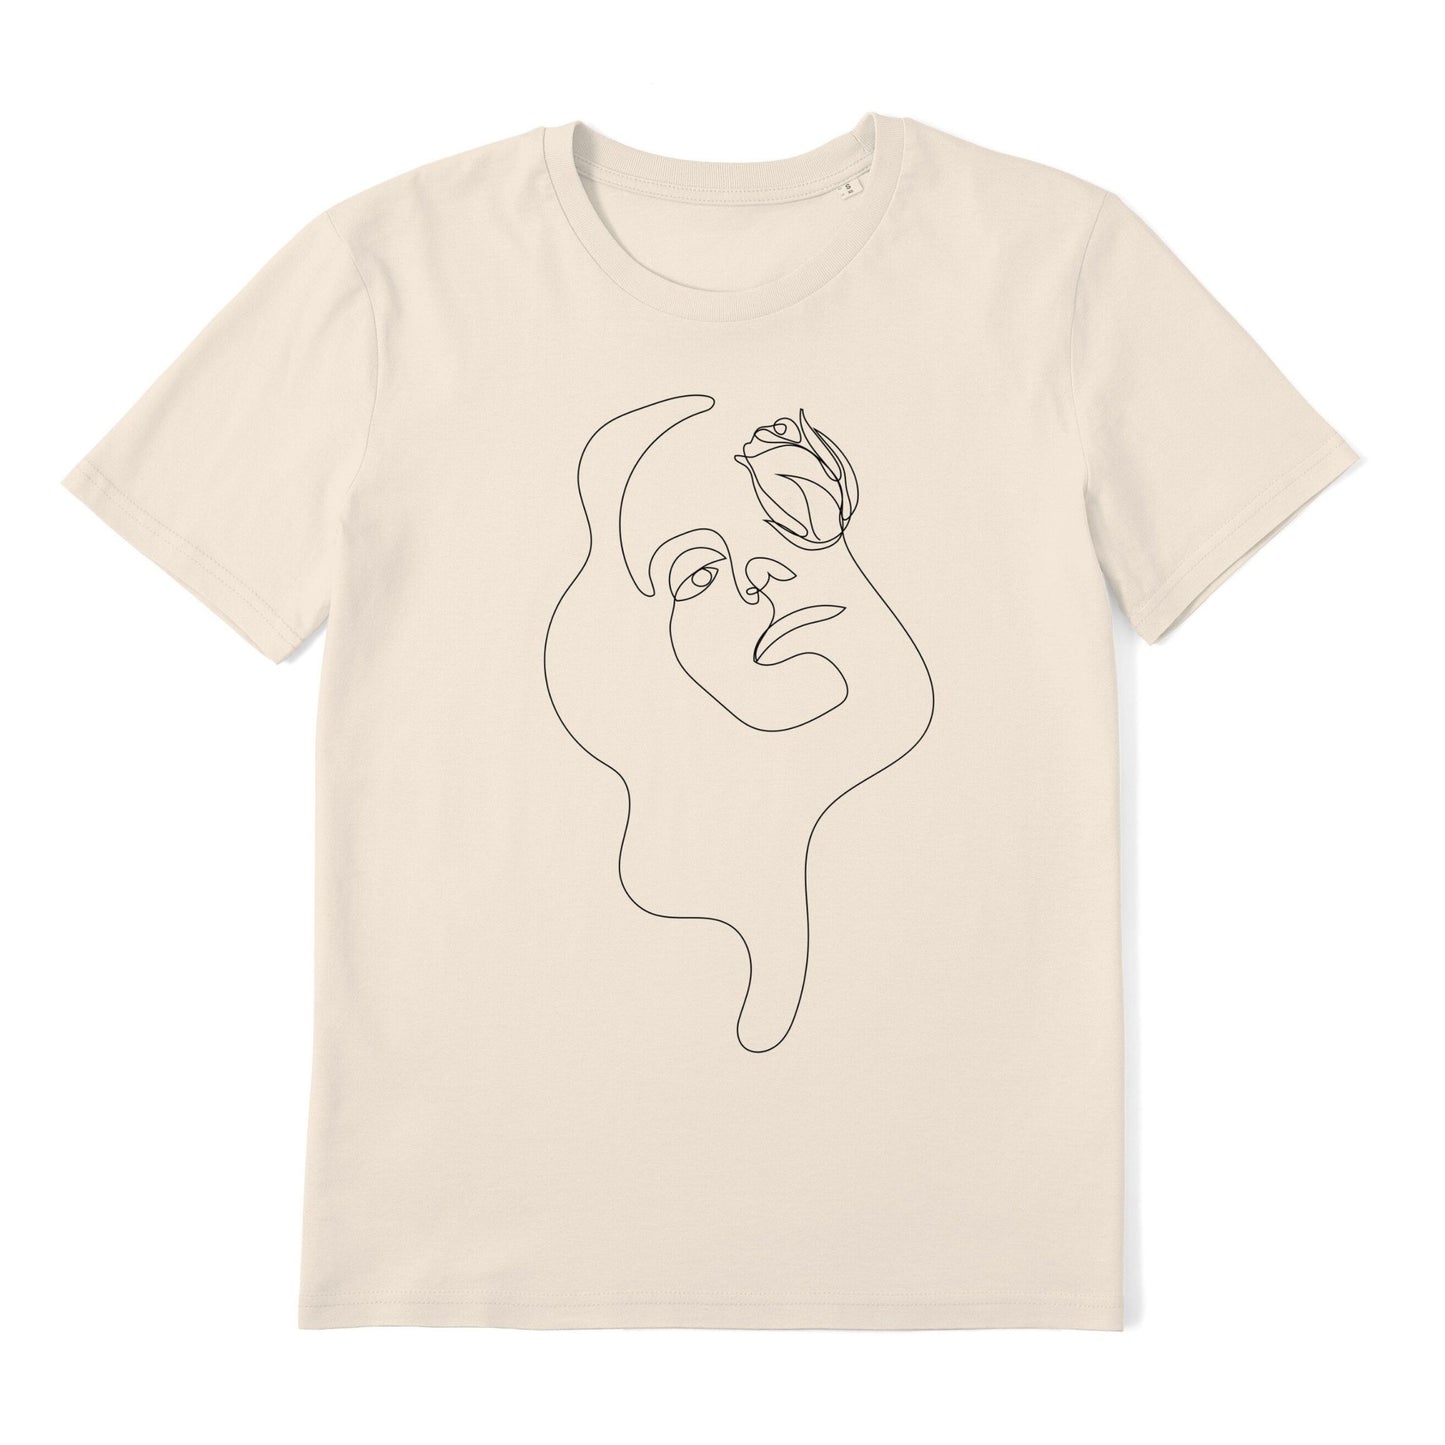 Woman & Flower Line Art T-Shirt - Pathos Studio - T-Shirts